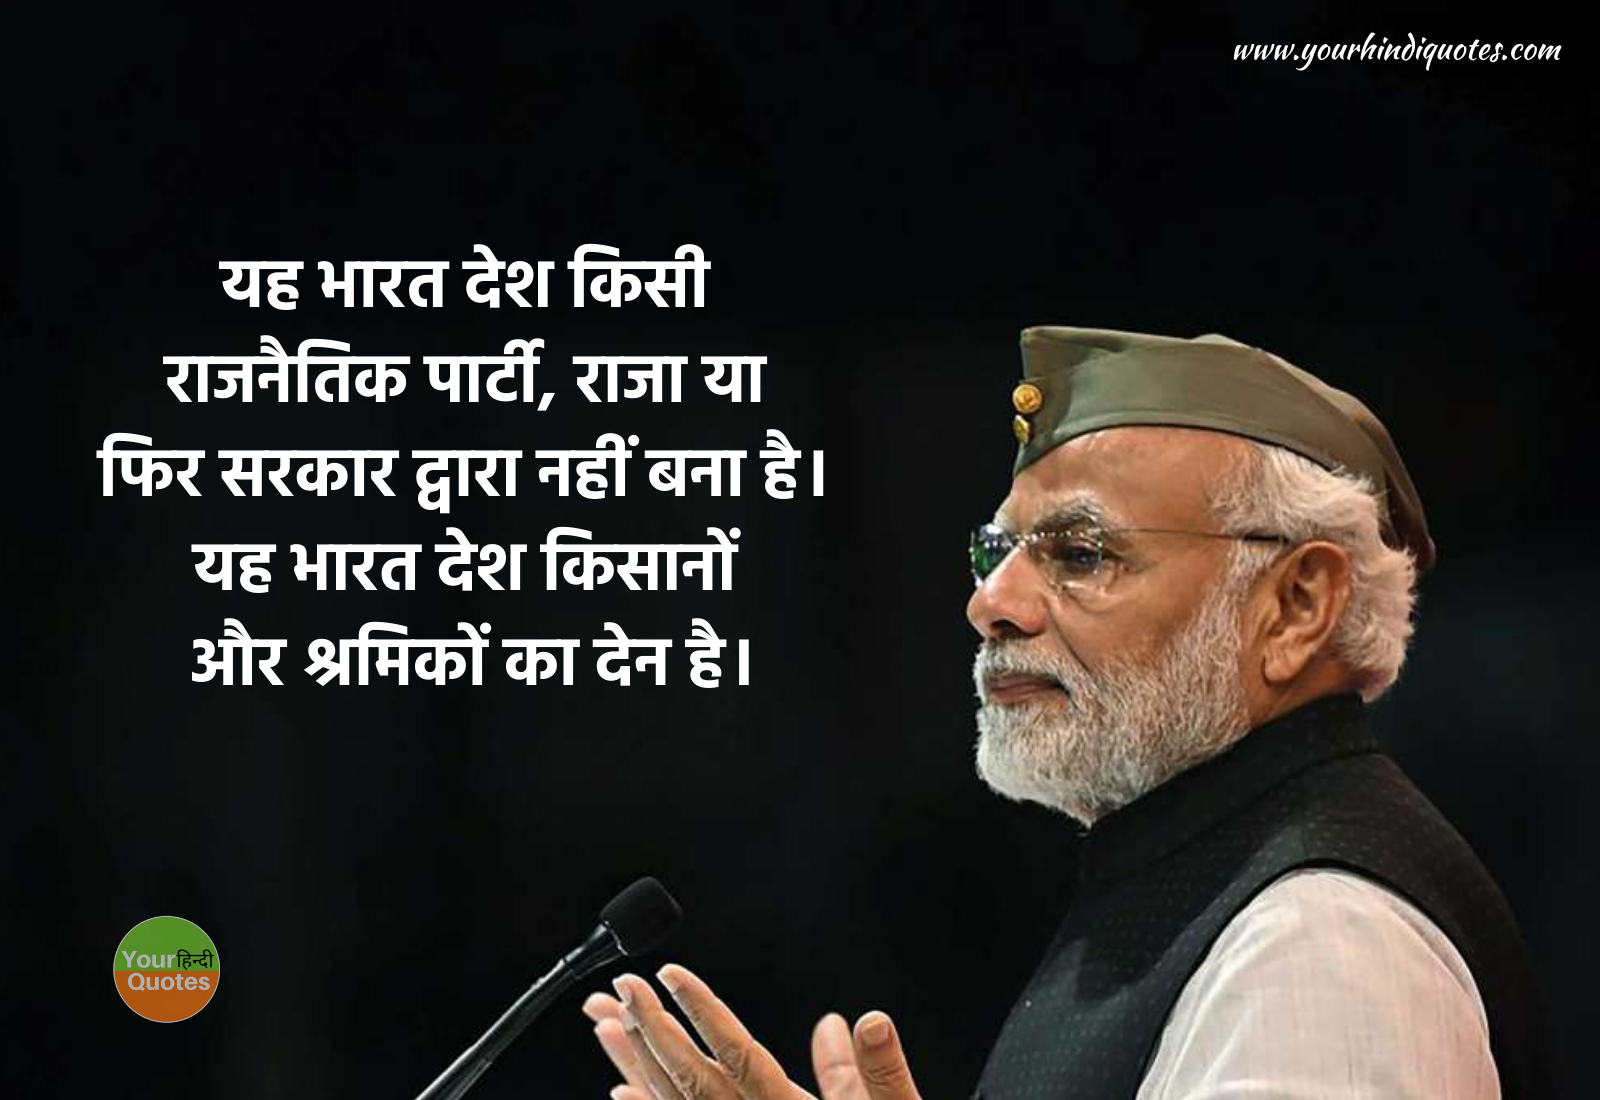 Narendra Modi Quotes in Hindi